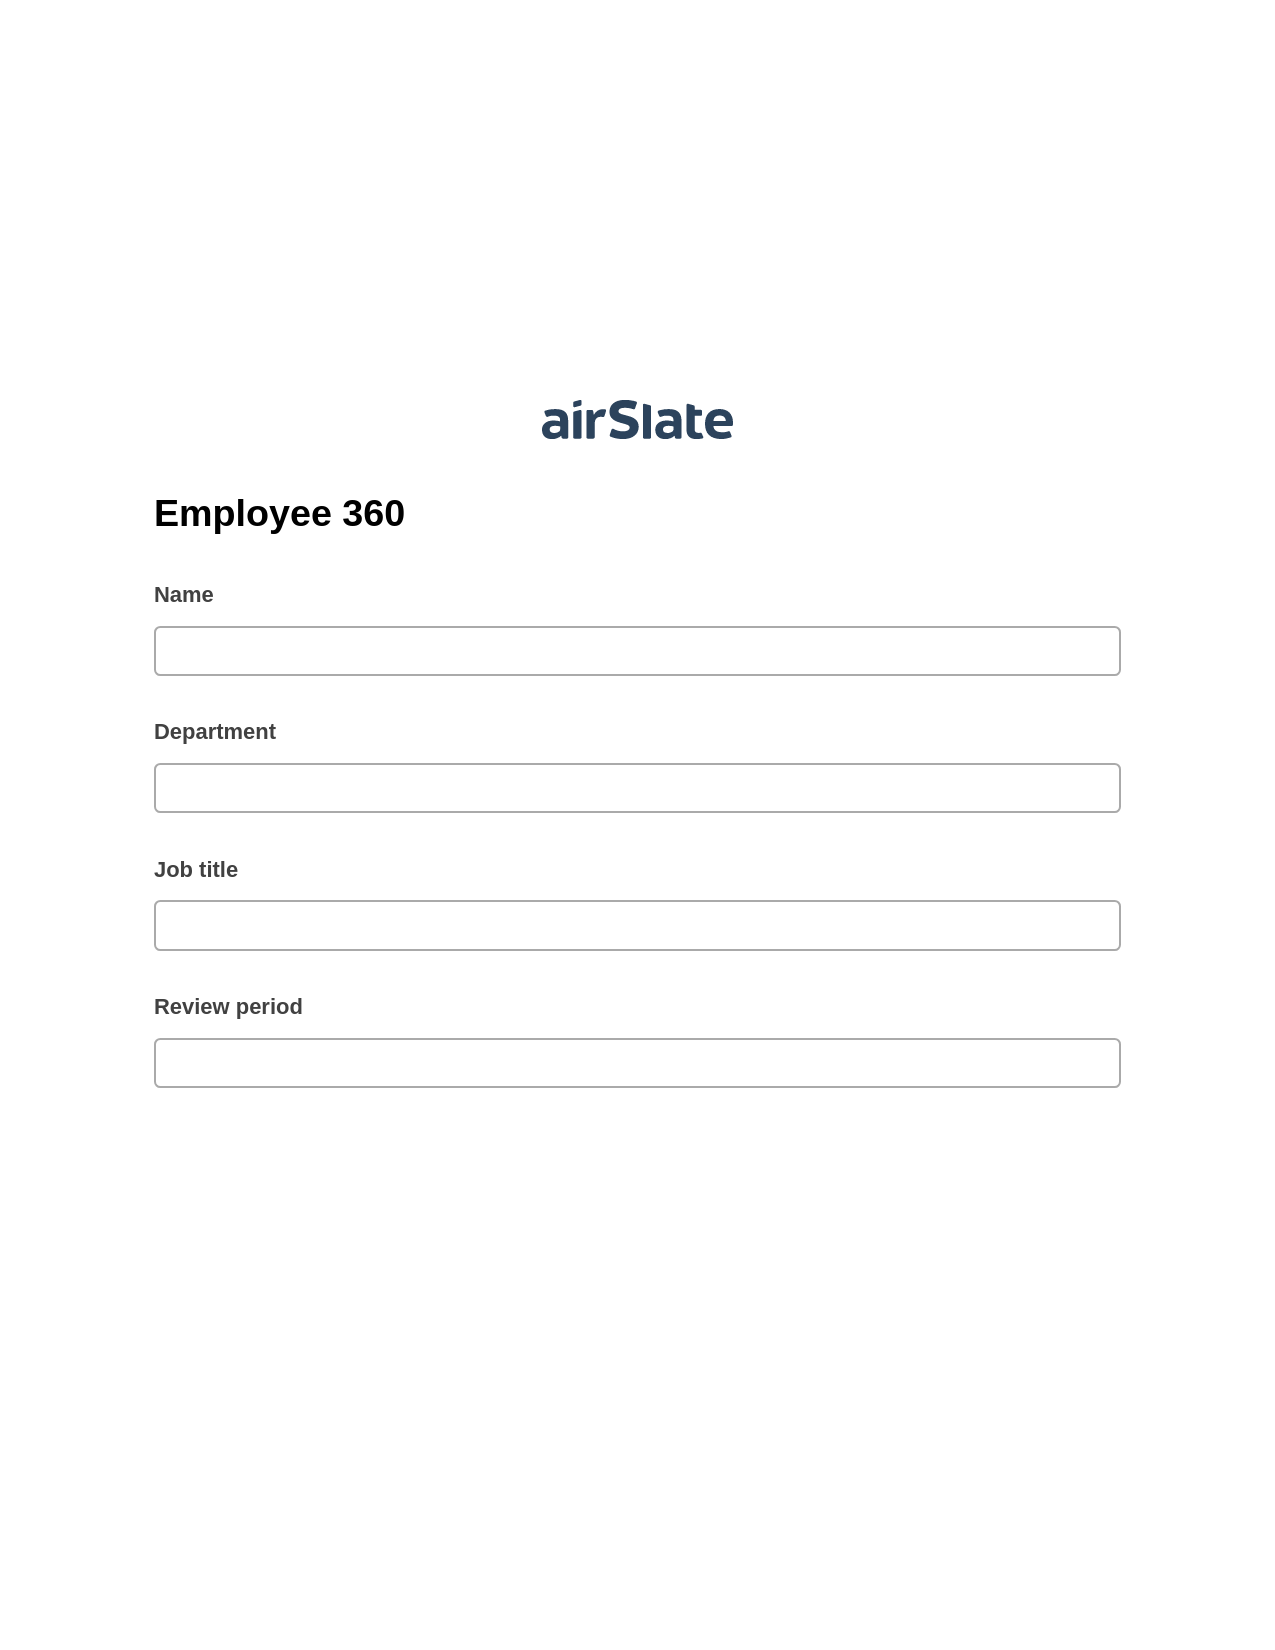 Multirole Employee 360 Pre-fill from Salesforce Records Bot, Google Calendar Bot, Export to WebMerge Bot